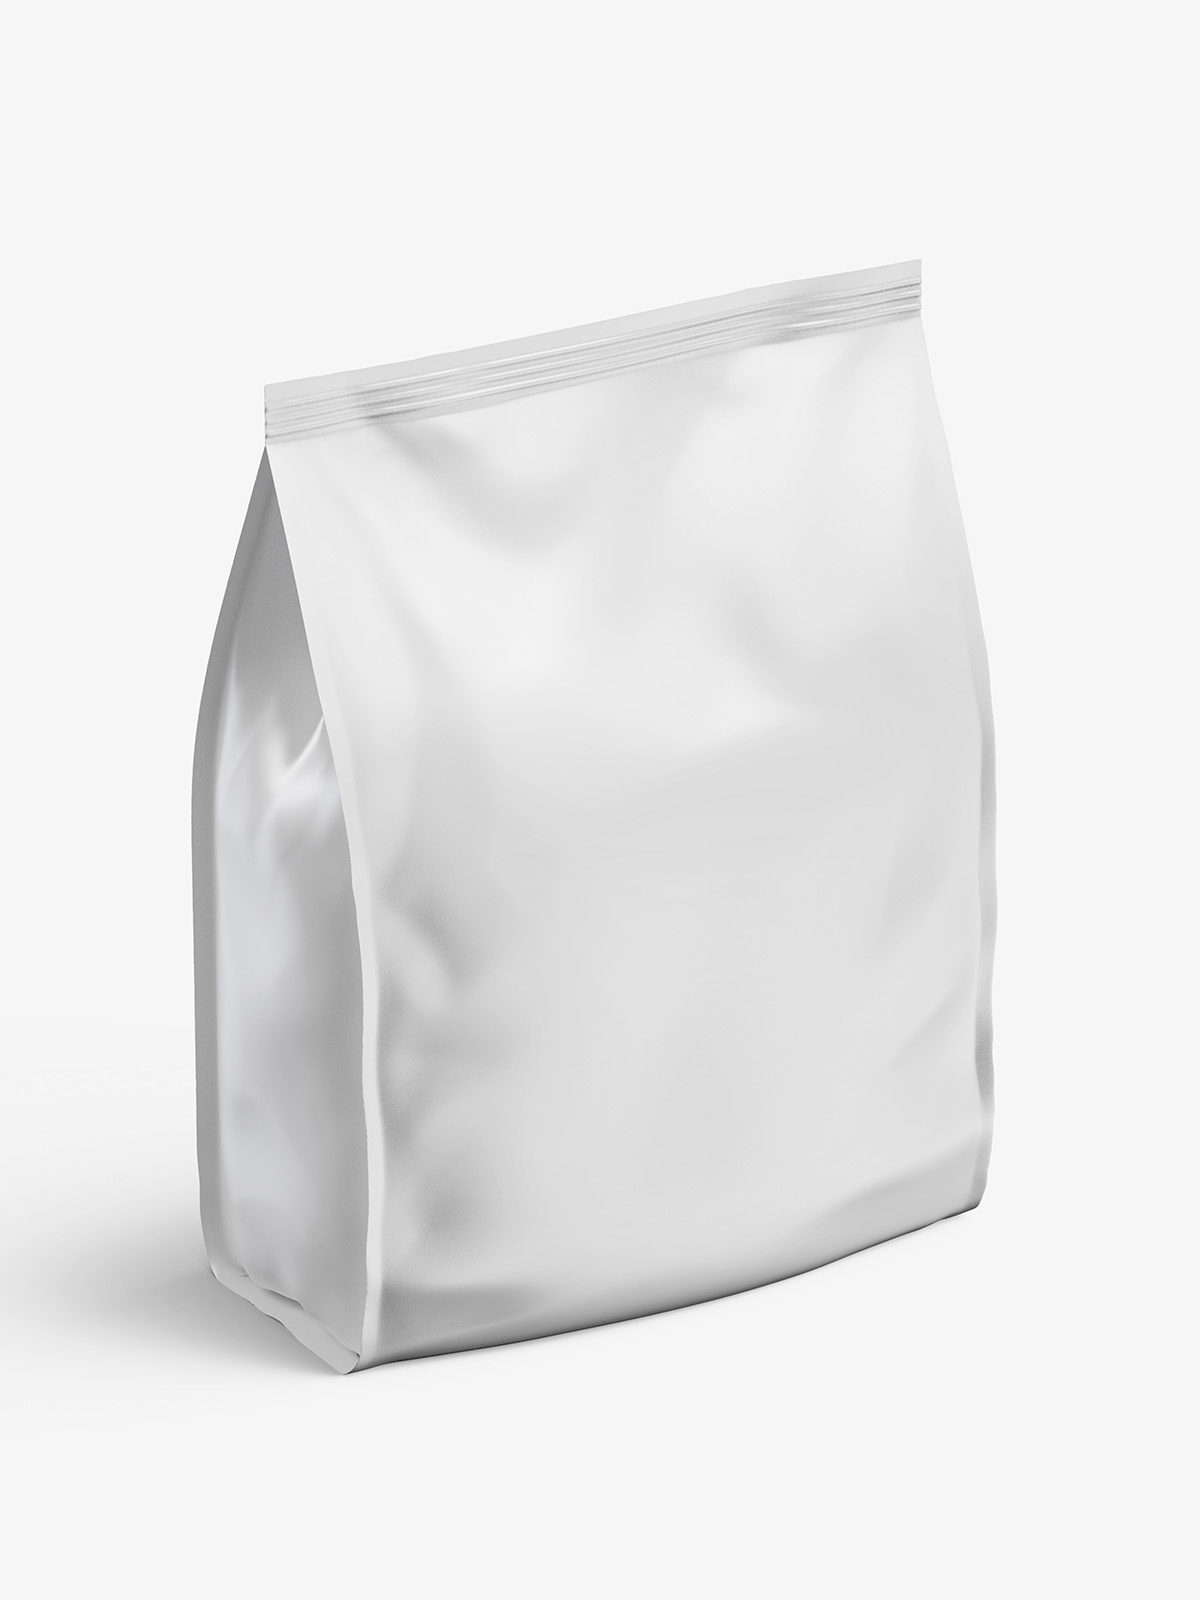 Download Matt food bag mockup - Smarty Mockups